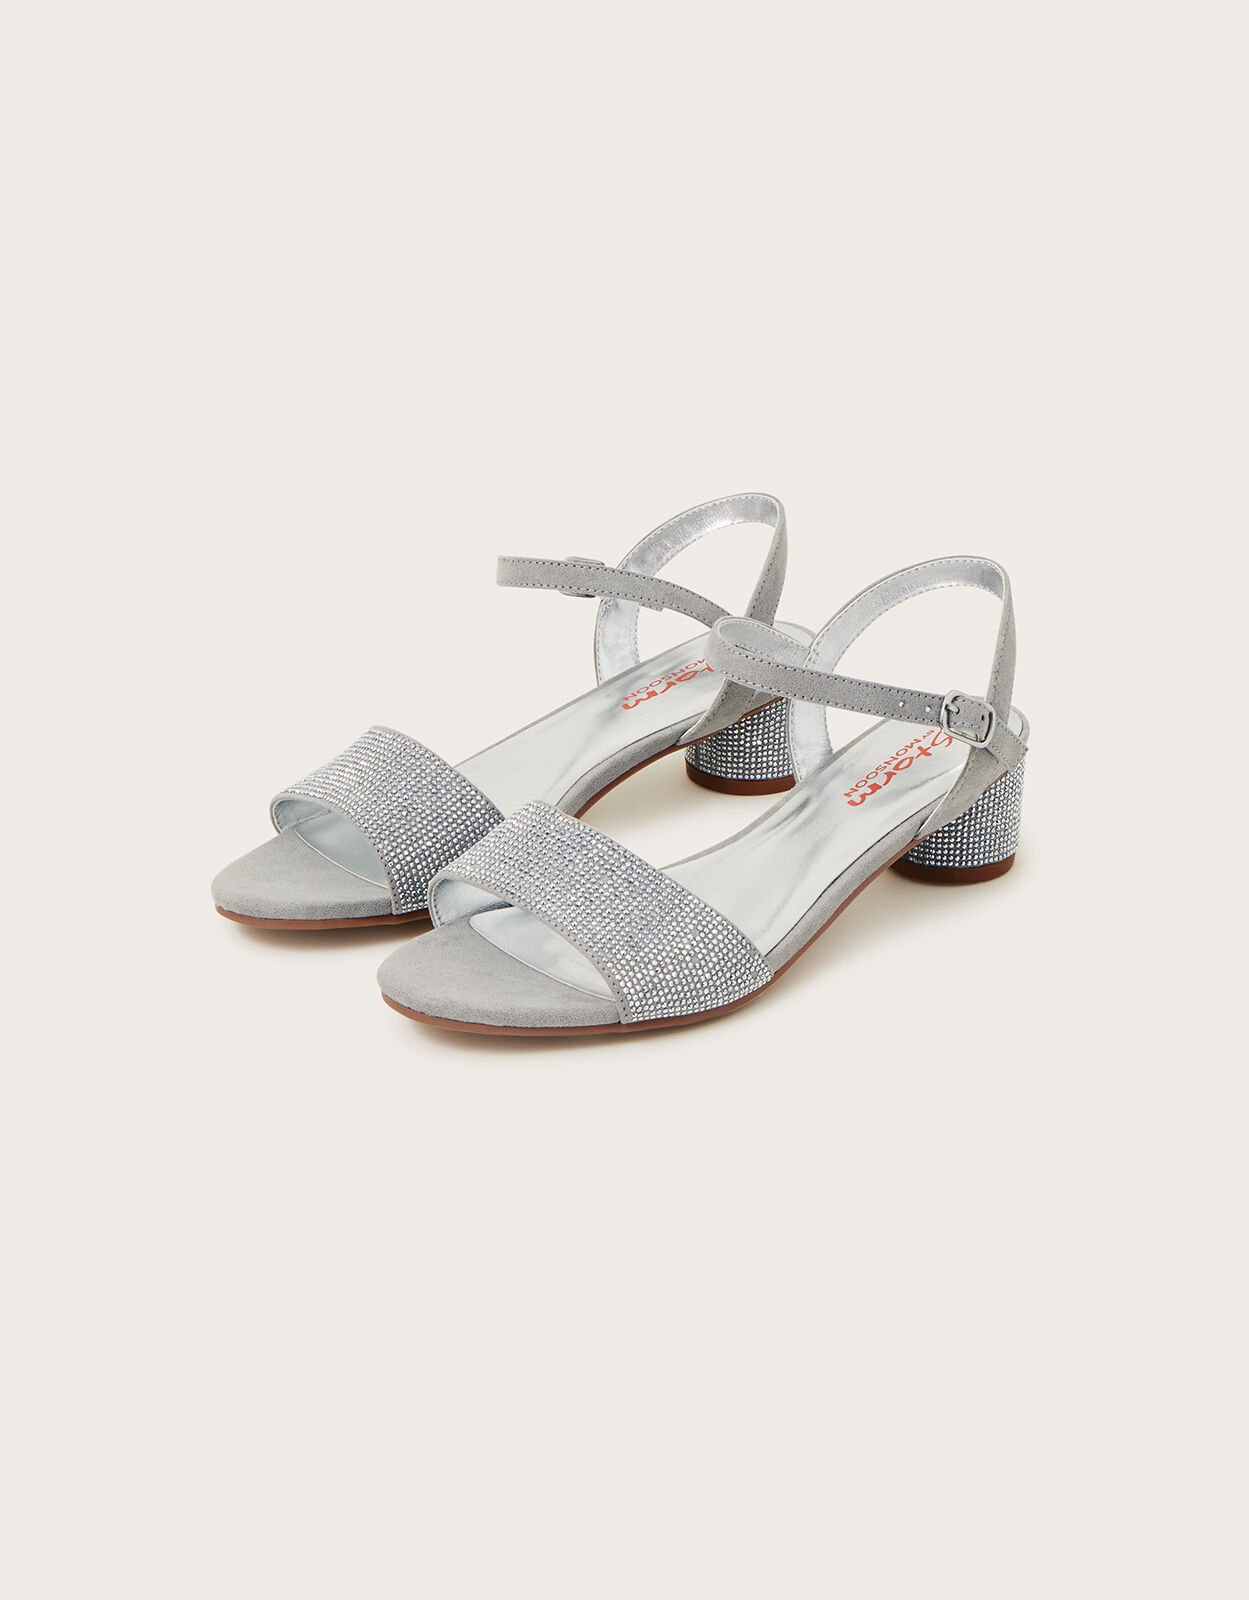 Low Heel Silver Sandals Uk on Sale | bellvalefarms.com